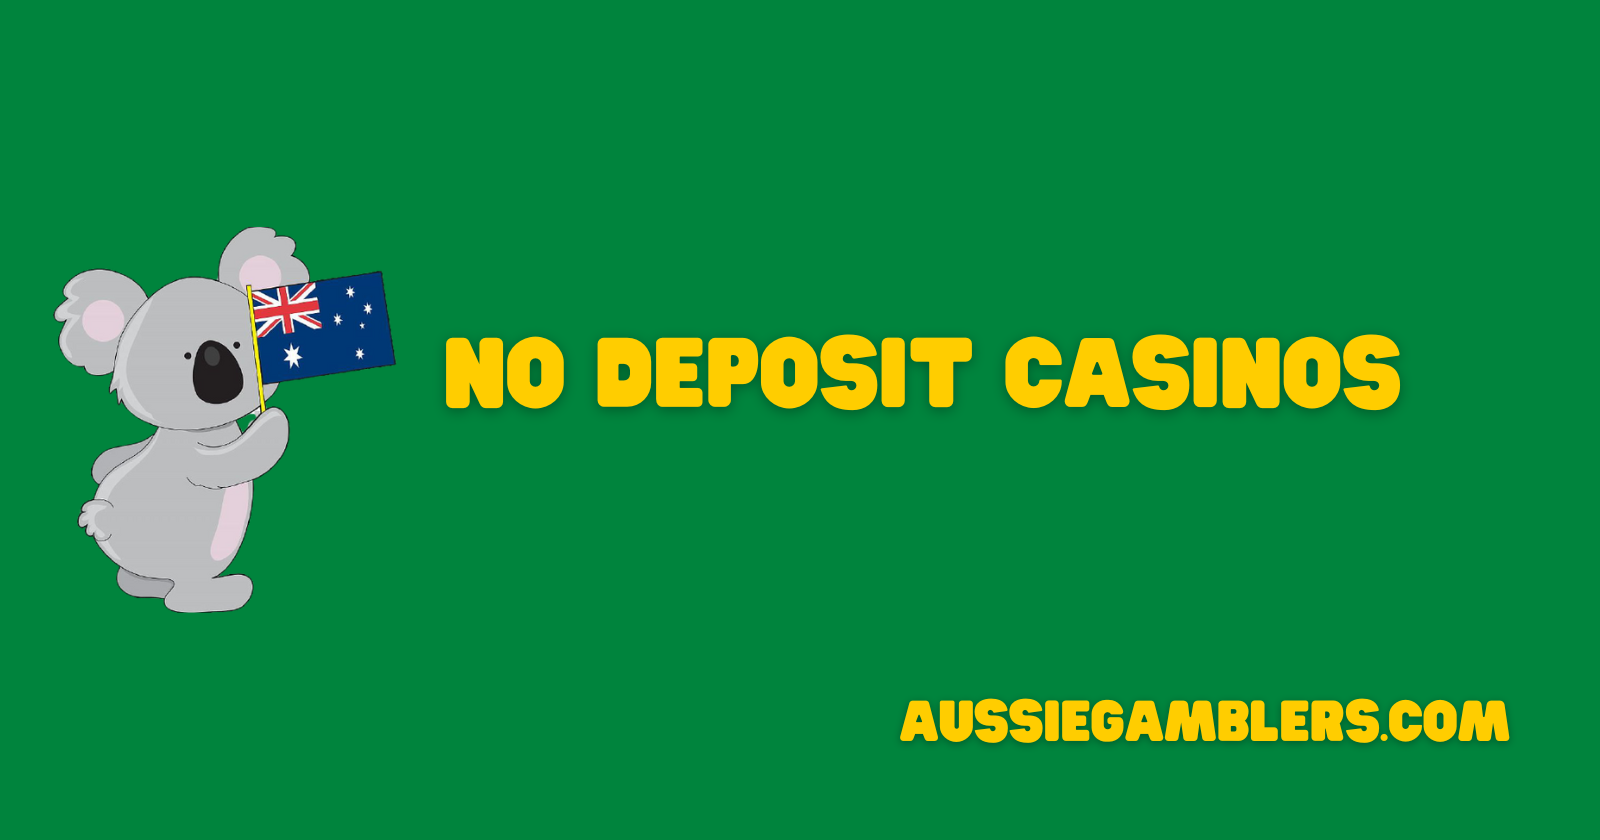 No deposit casino banner